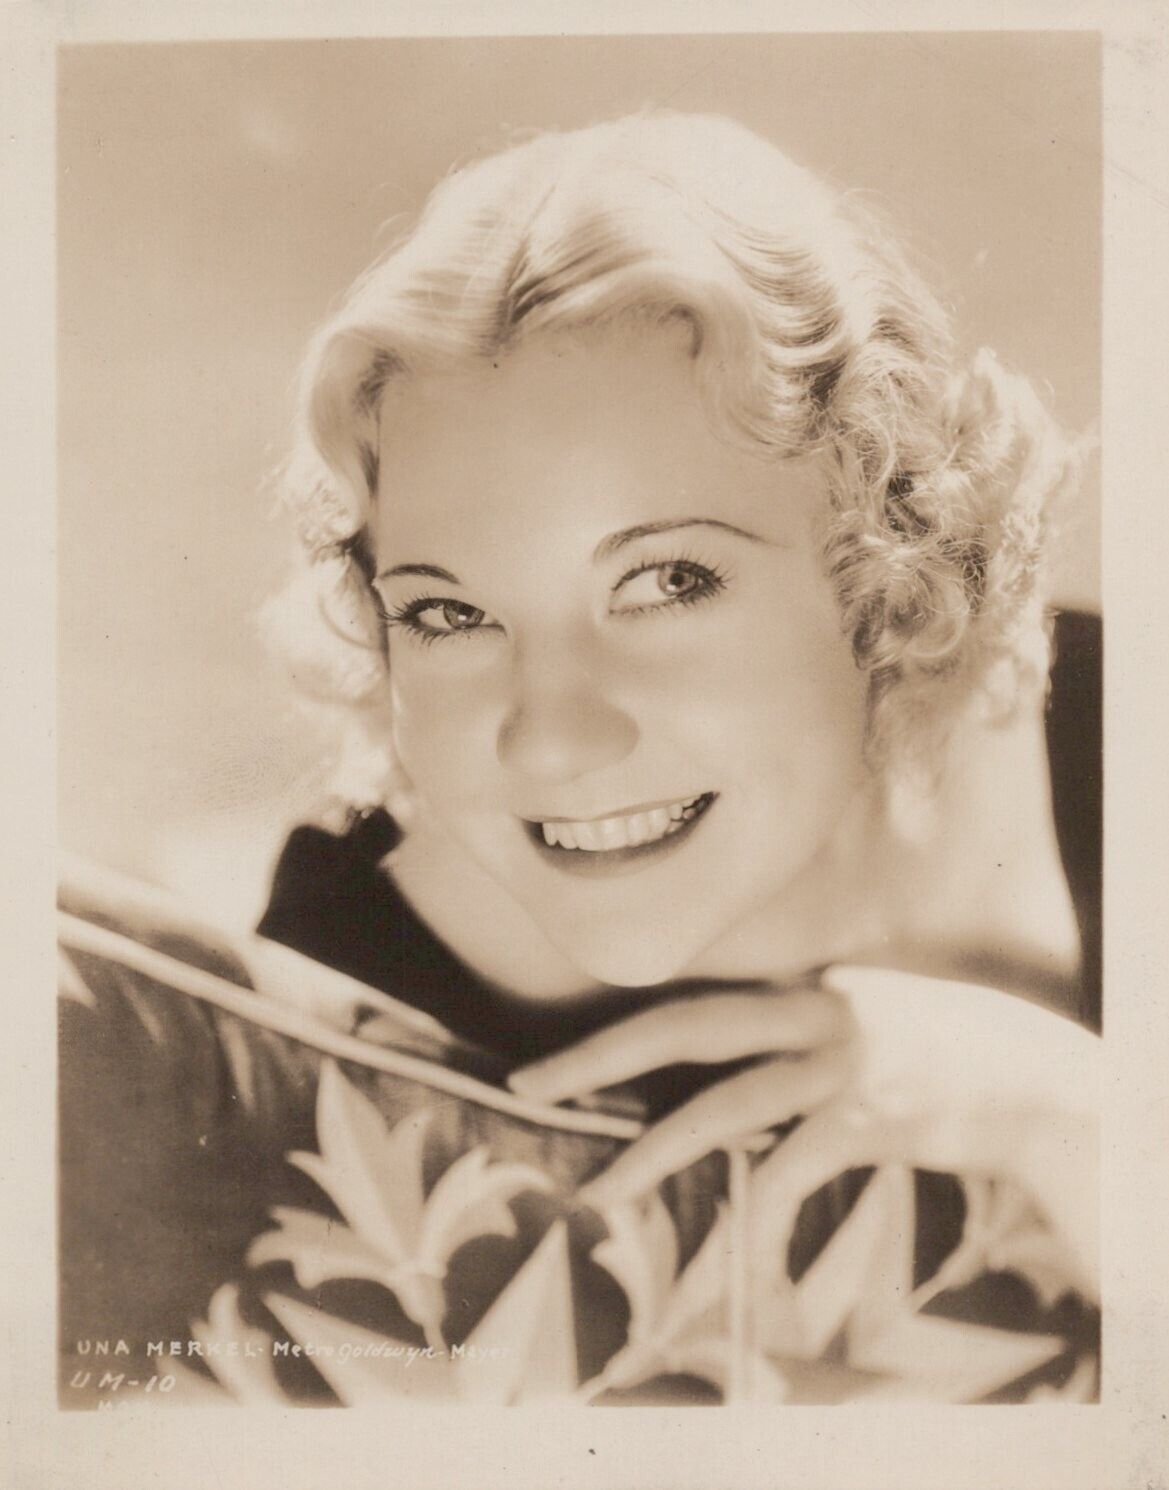 Una Merkel (1930s) 🎬⭐ Stunning Portrait Original Vintage MGM Photo K 196